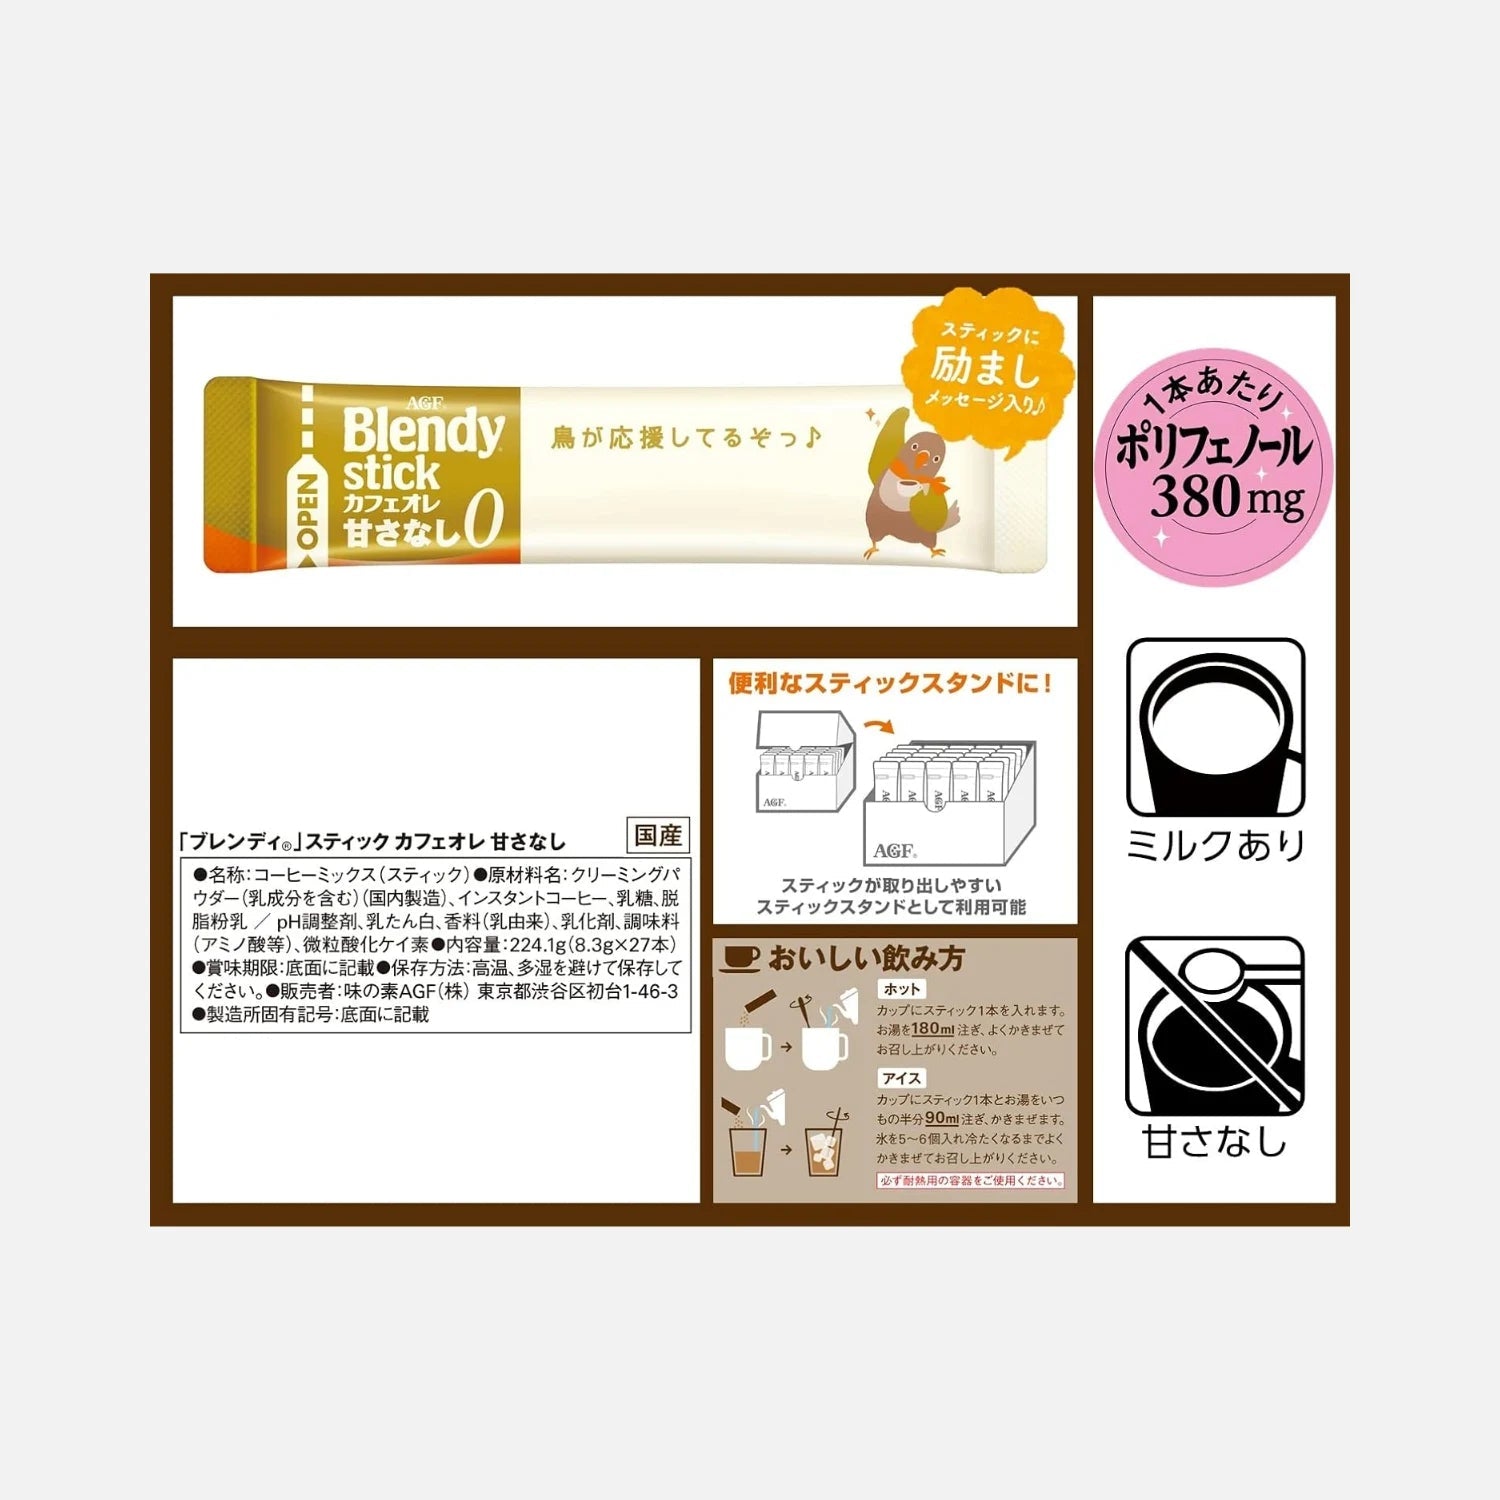 AGF Blendy Zero Sugar Cafe Au Lait (Pack of 27) - Buy Me Japan